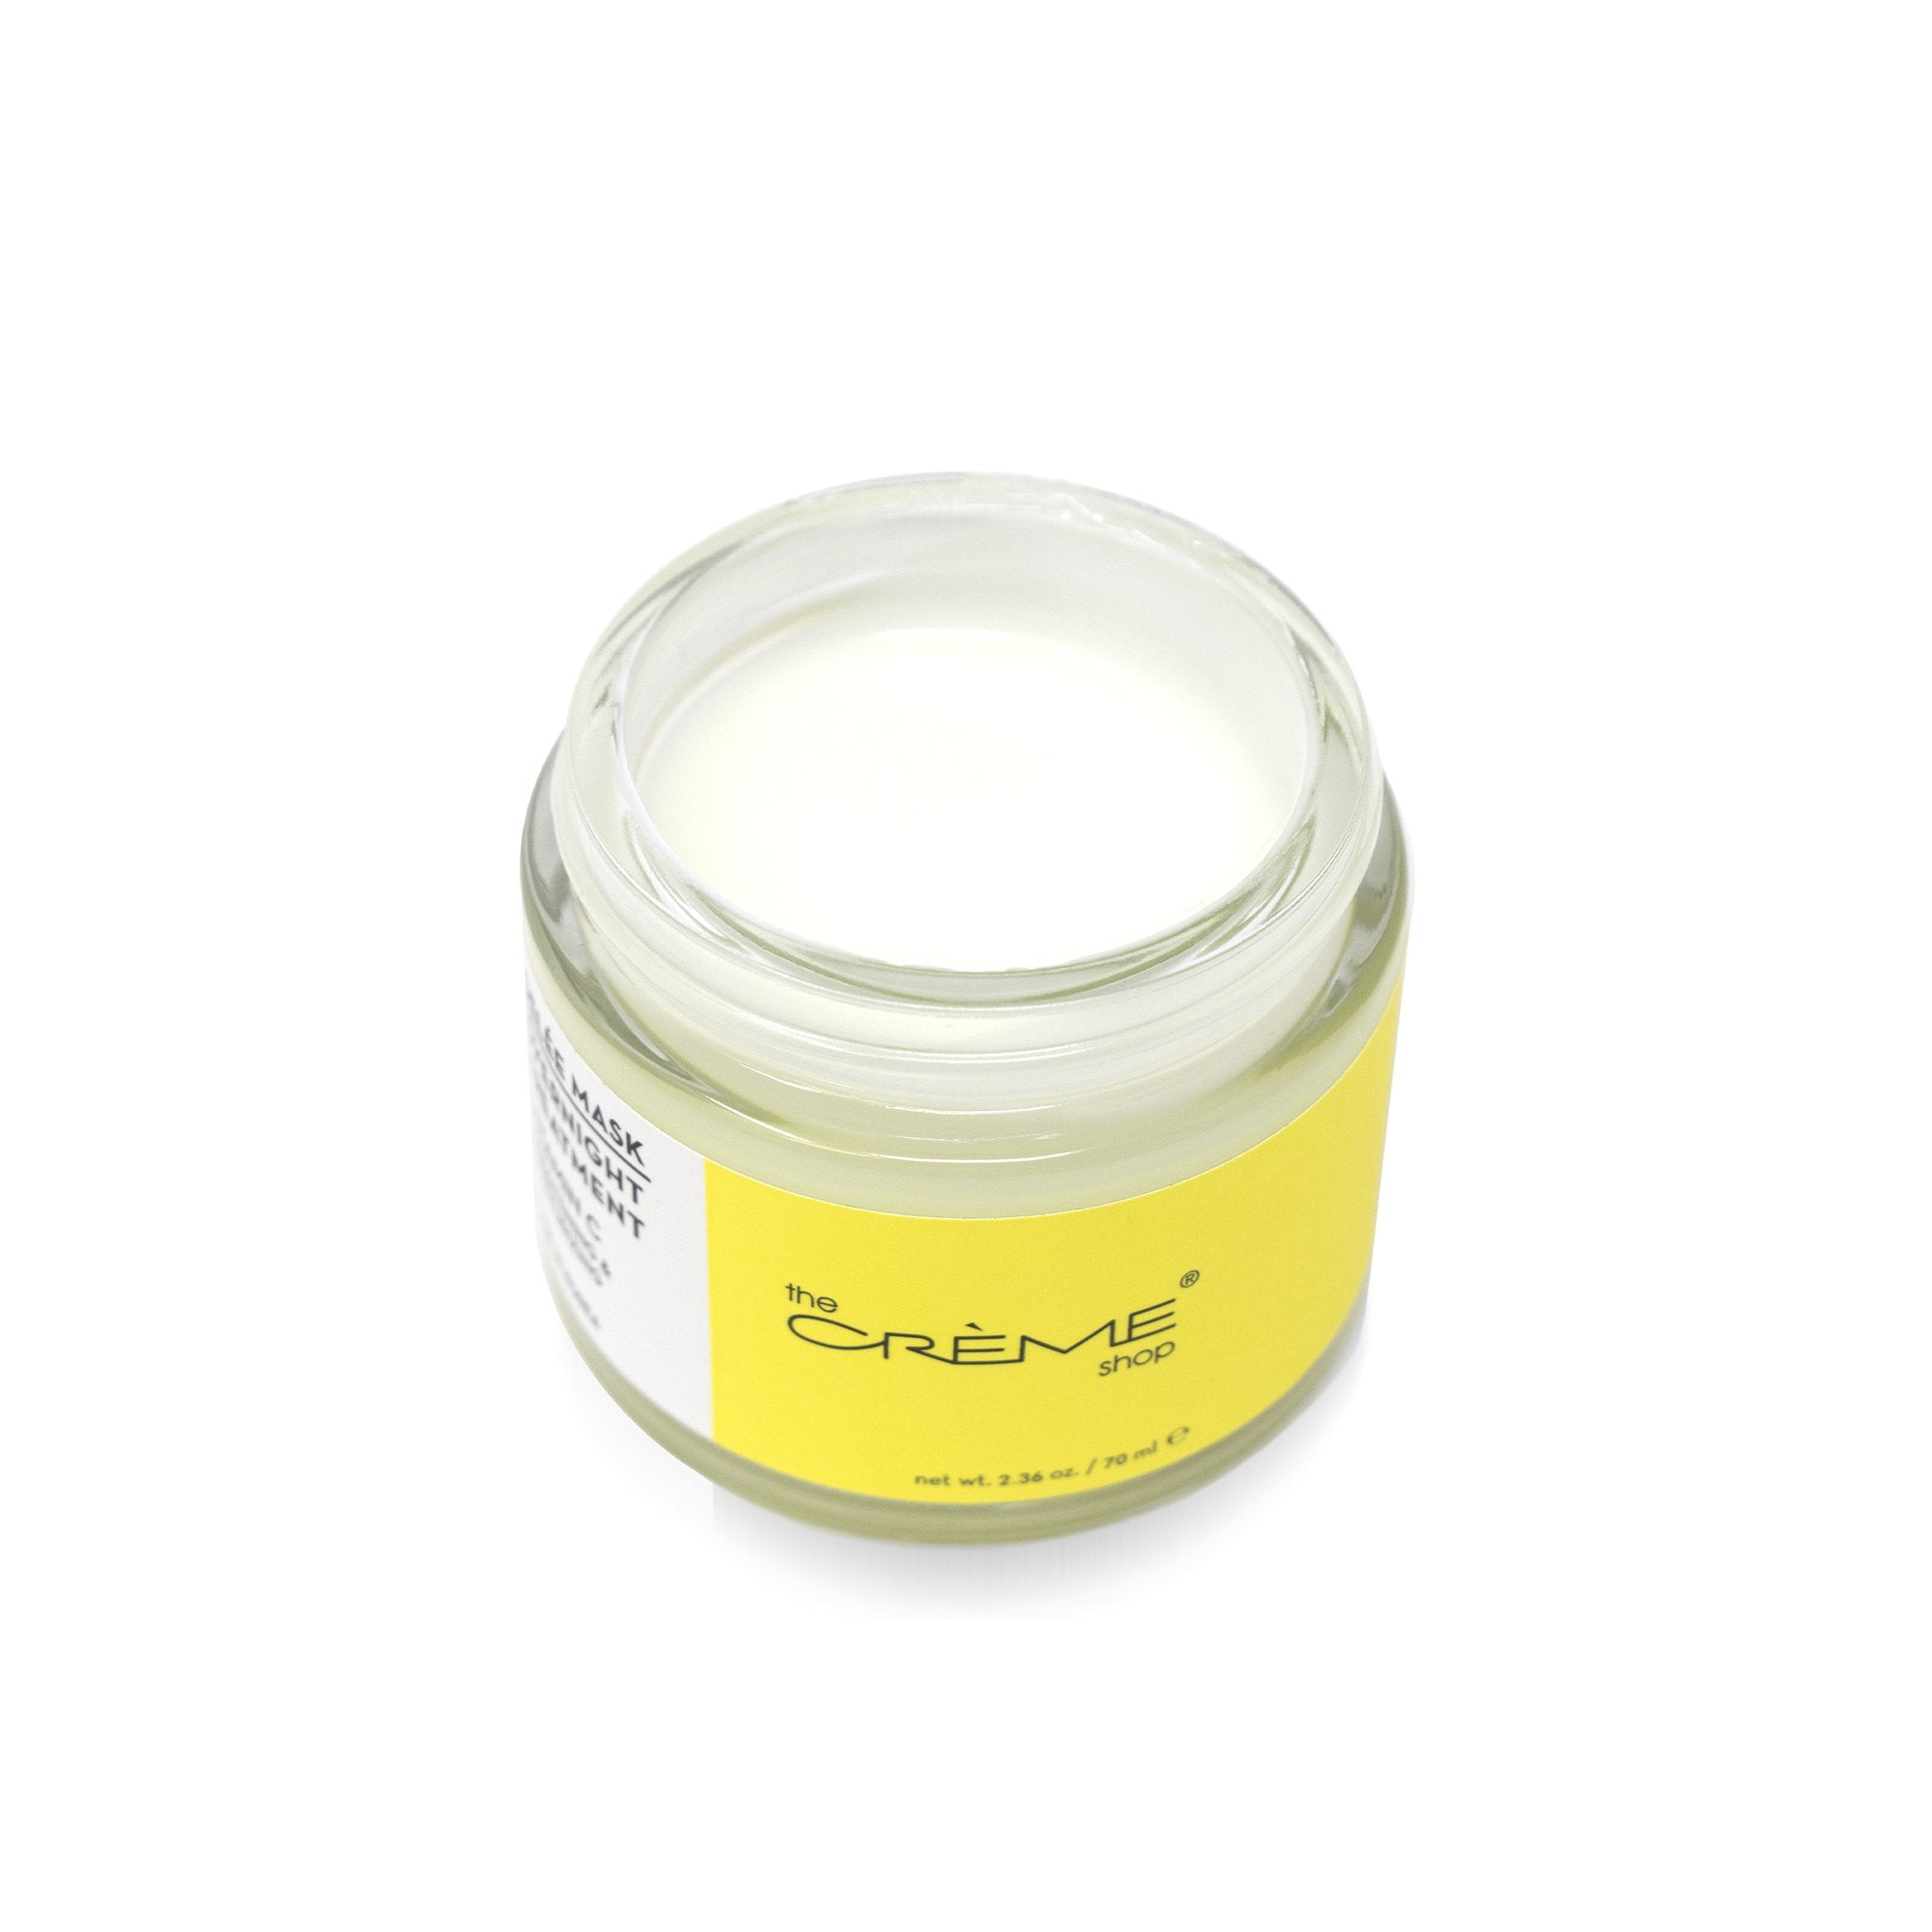 Vitamin C Gelée Mask Overnight Treatment - The Crème Shop